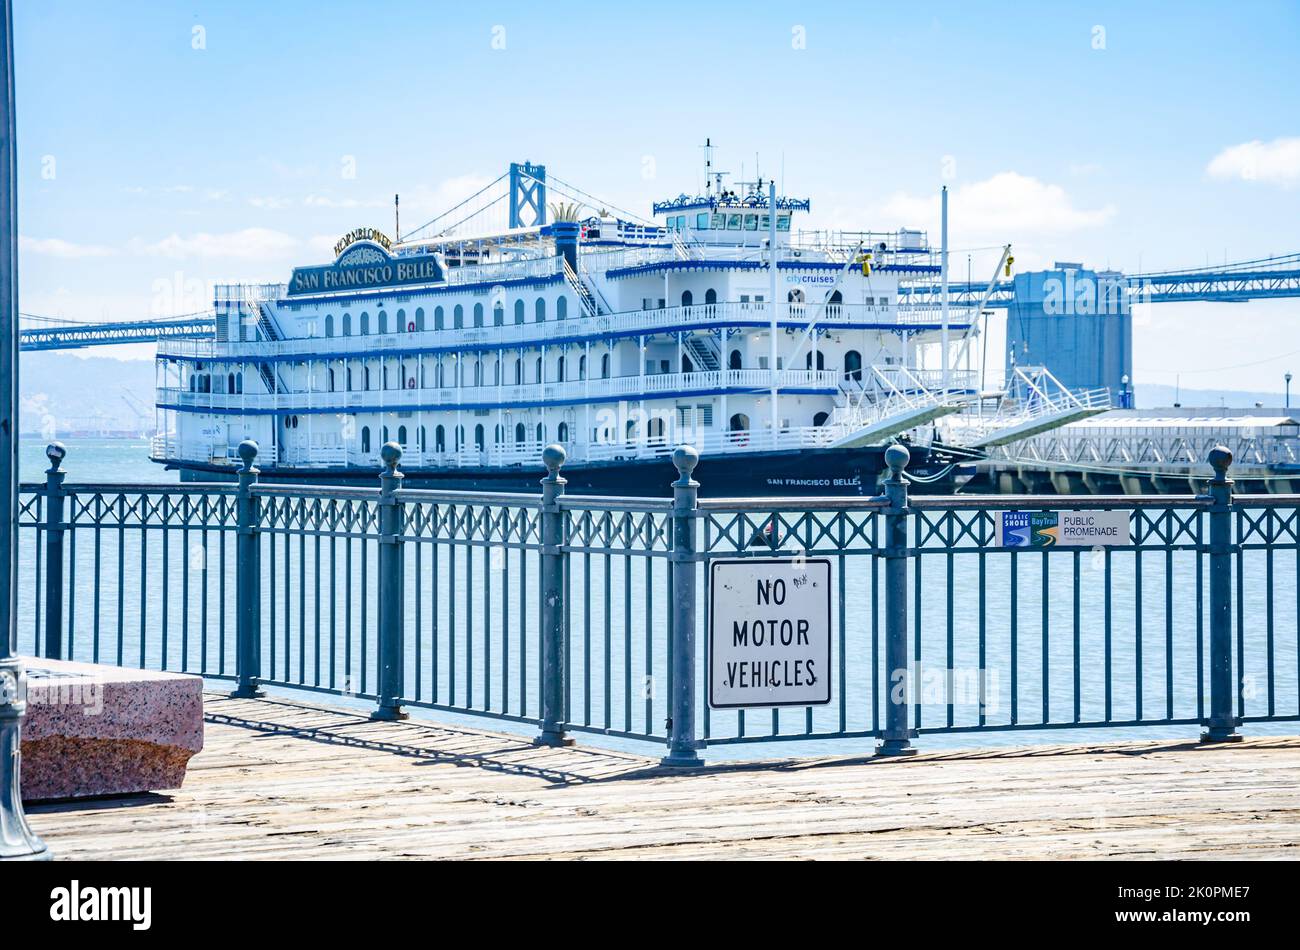 Cruise boat San Francisco Belle seen moored at San Francisco in California, USA Stock Photo